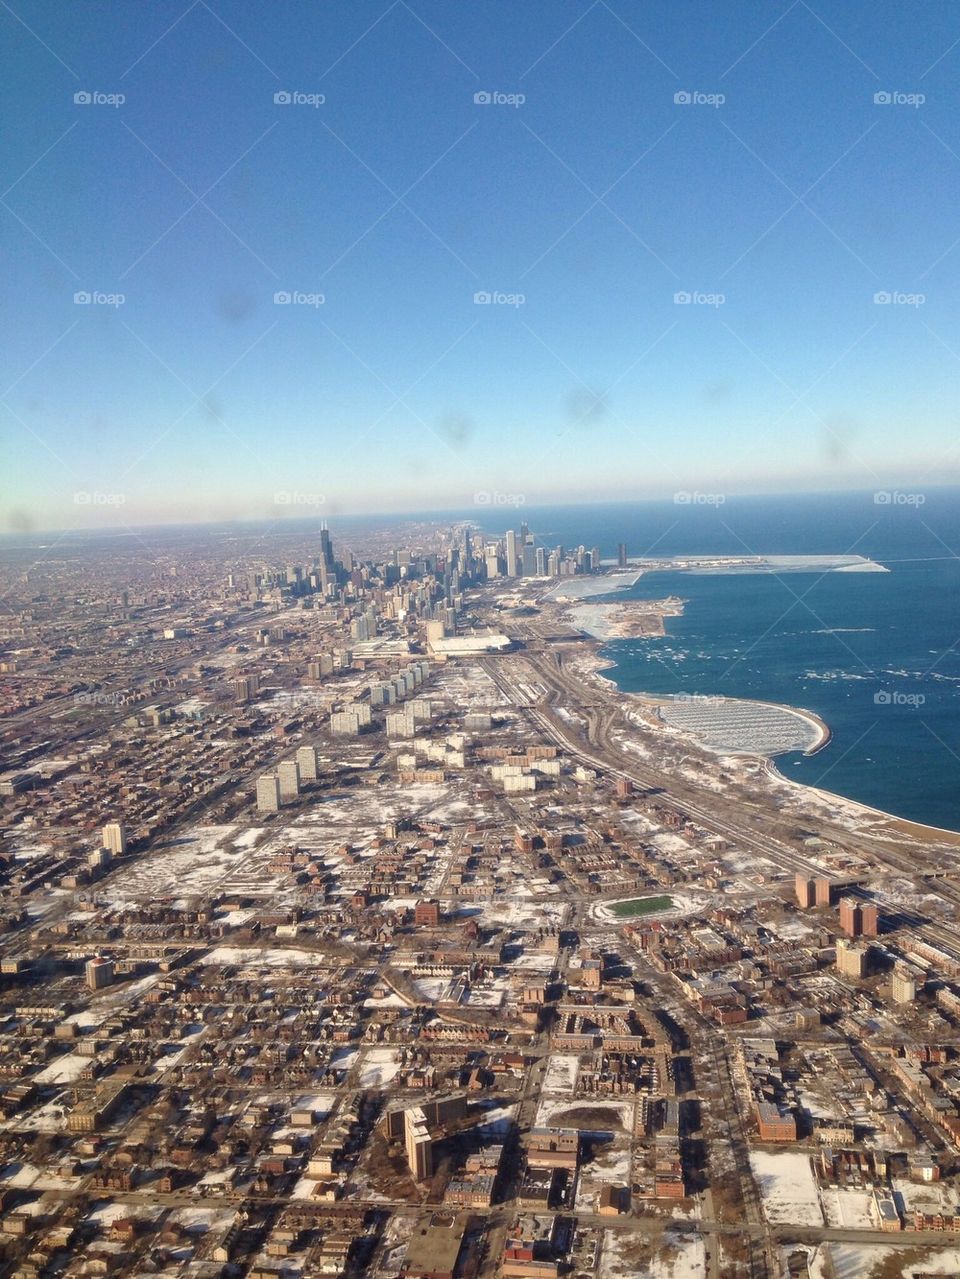 Flying over Chicago 